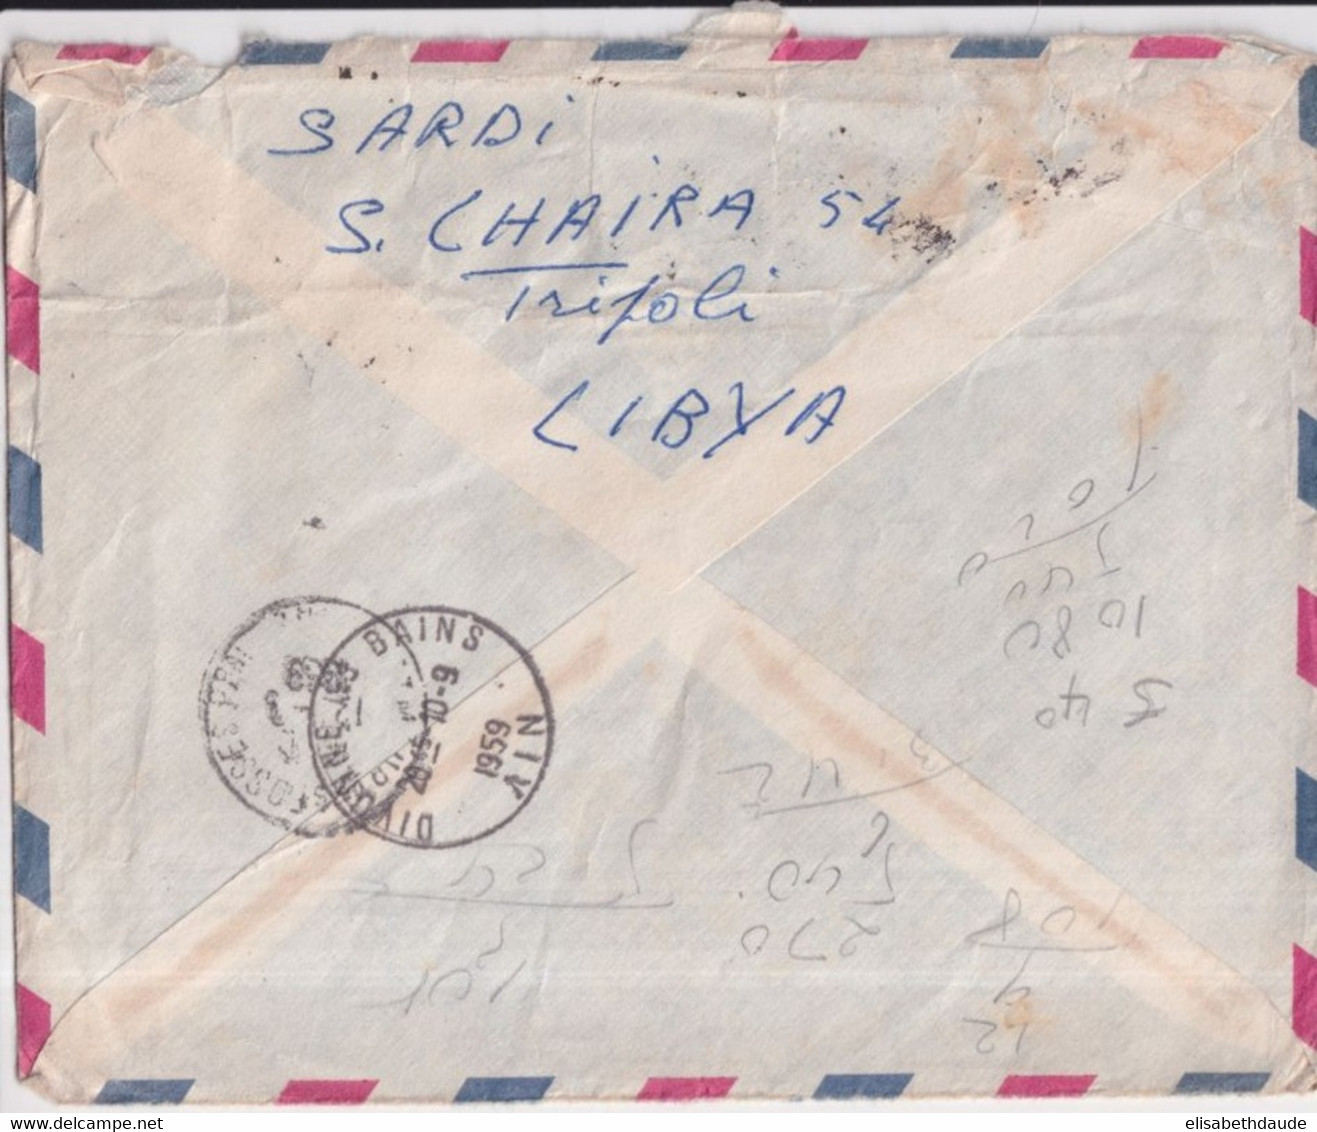 1959 - LIBYE - ENVELOPPE AIRMAIL De TRIPOLI => DAKAR (SENEGAL) => DIVONNE (AIN) => ST MAUR (SEINE) => GIMONT (GERS) !! - Libye